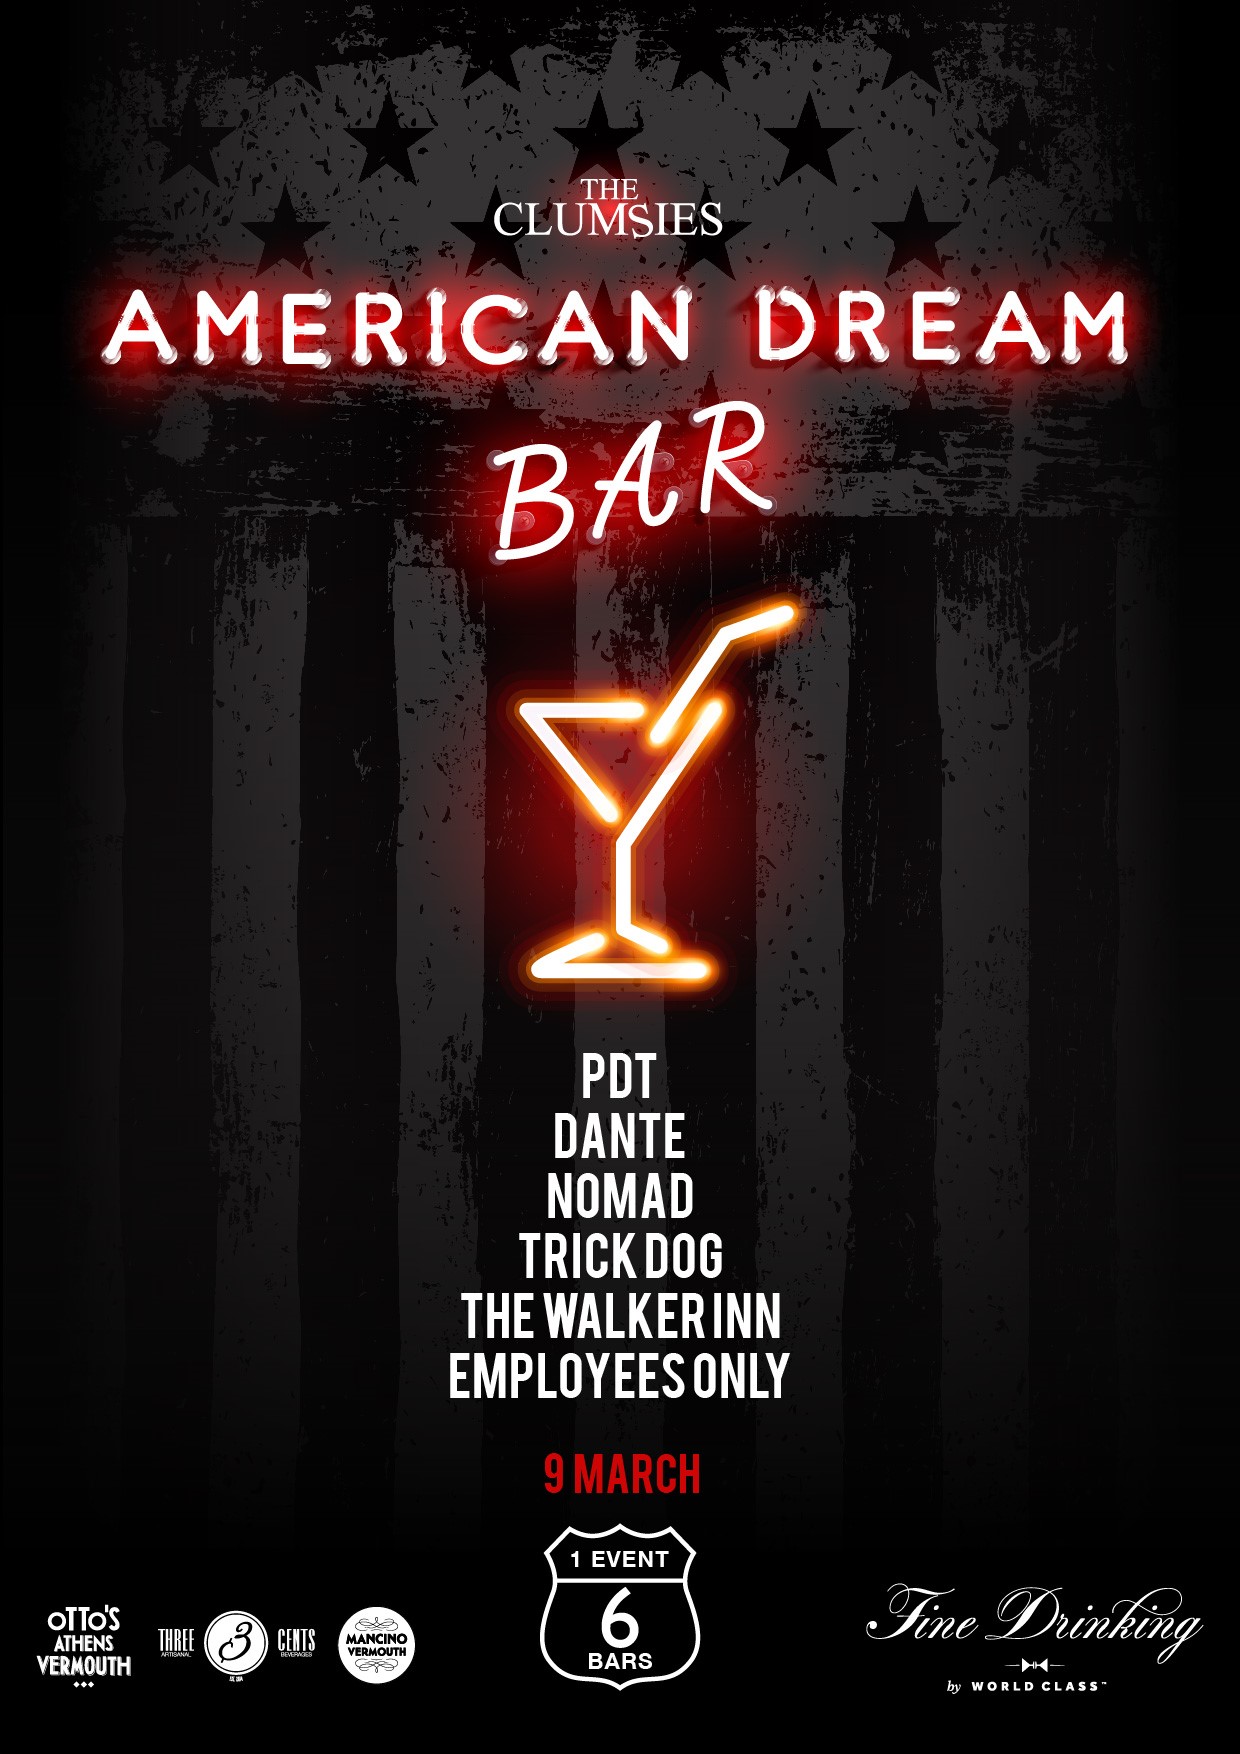 The Clumsies American Dream Bar